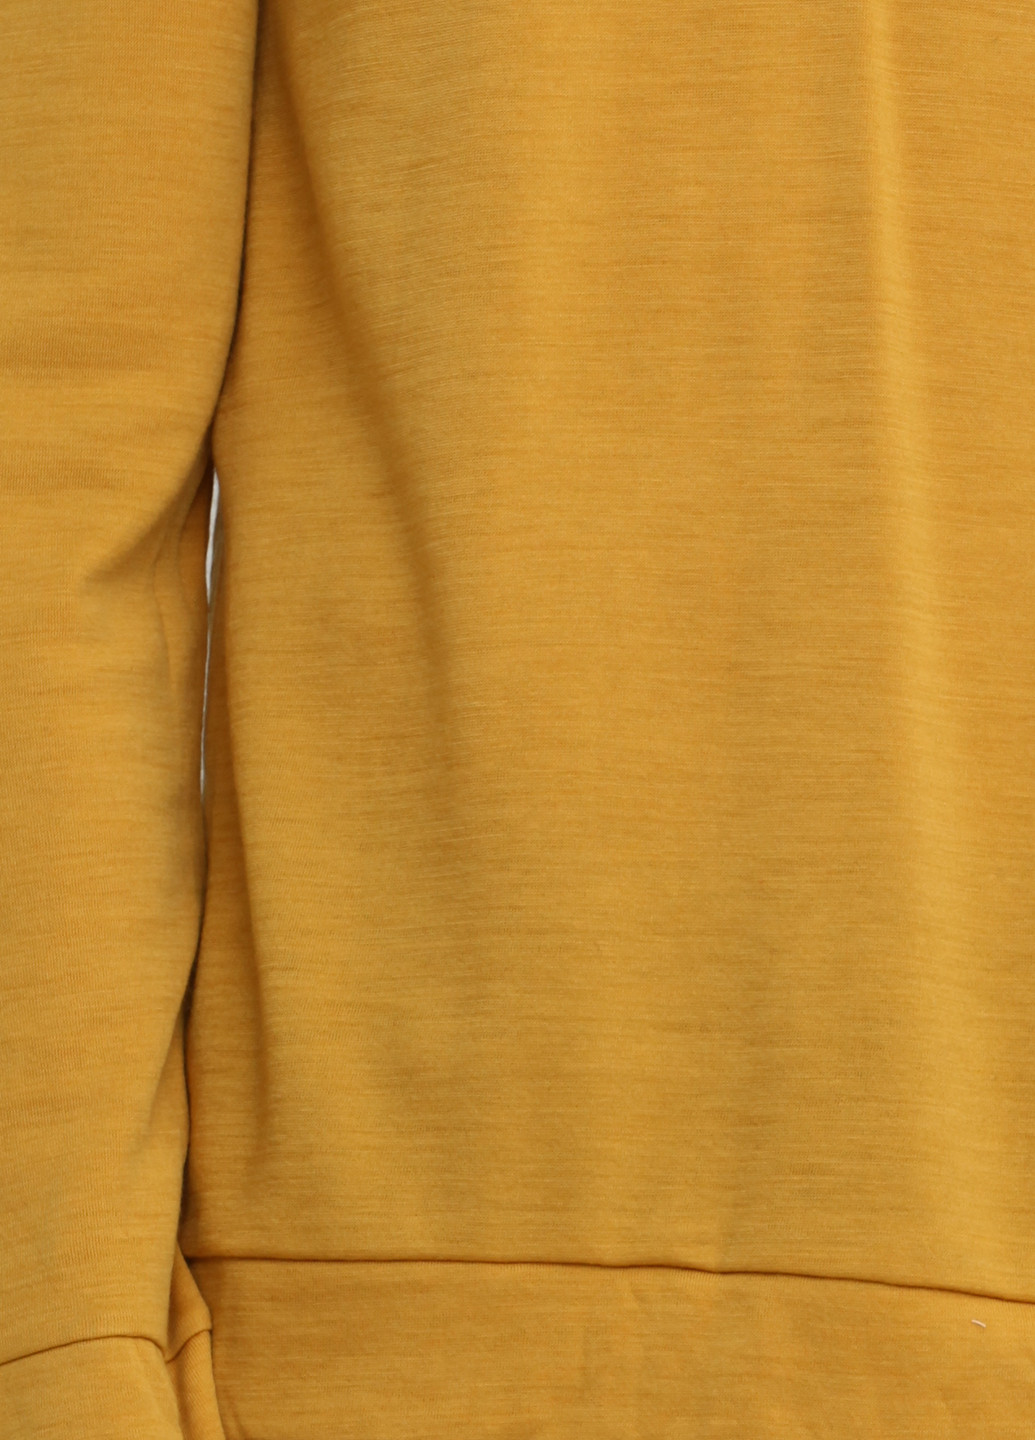 Жовтий демісезонний пуловер пуловер Cos